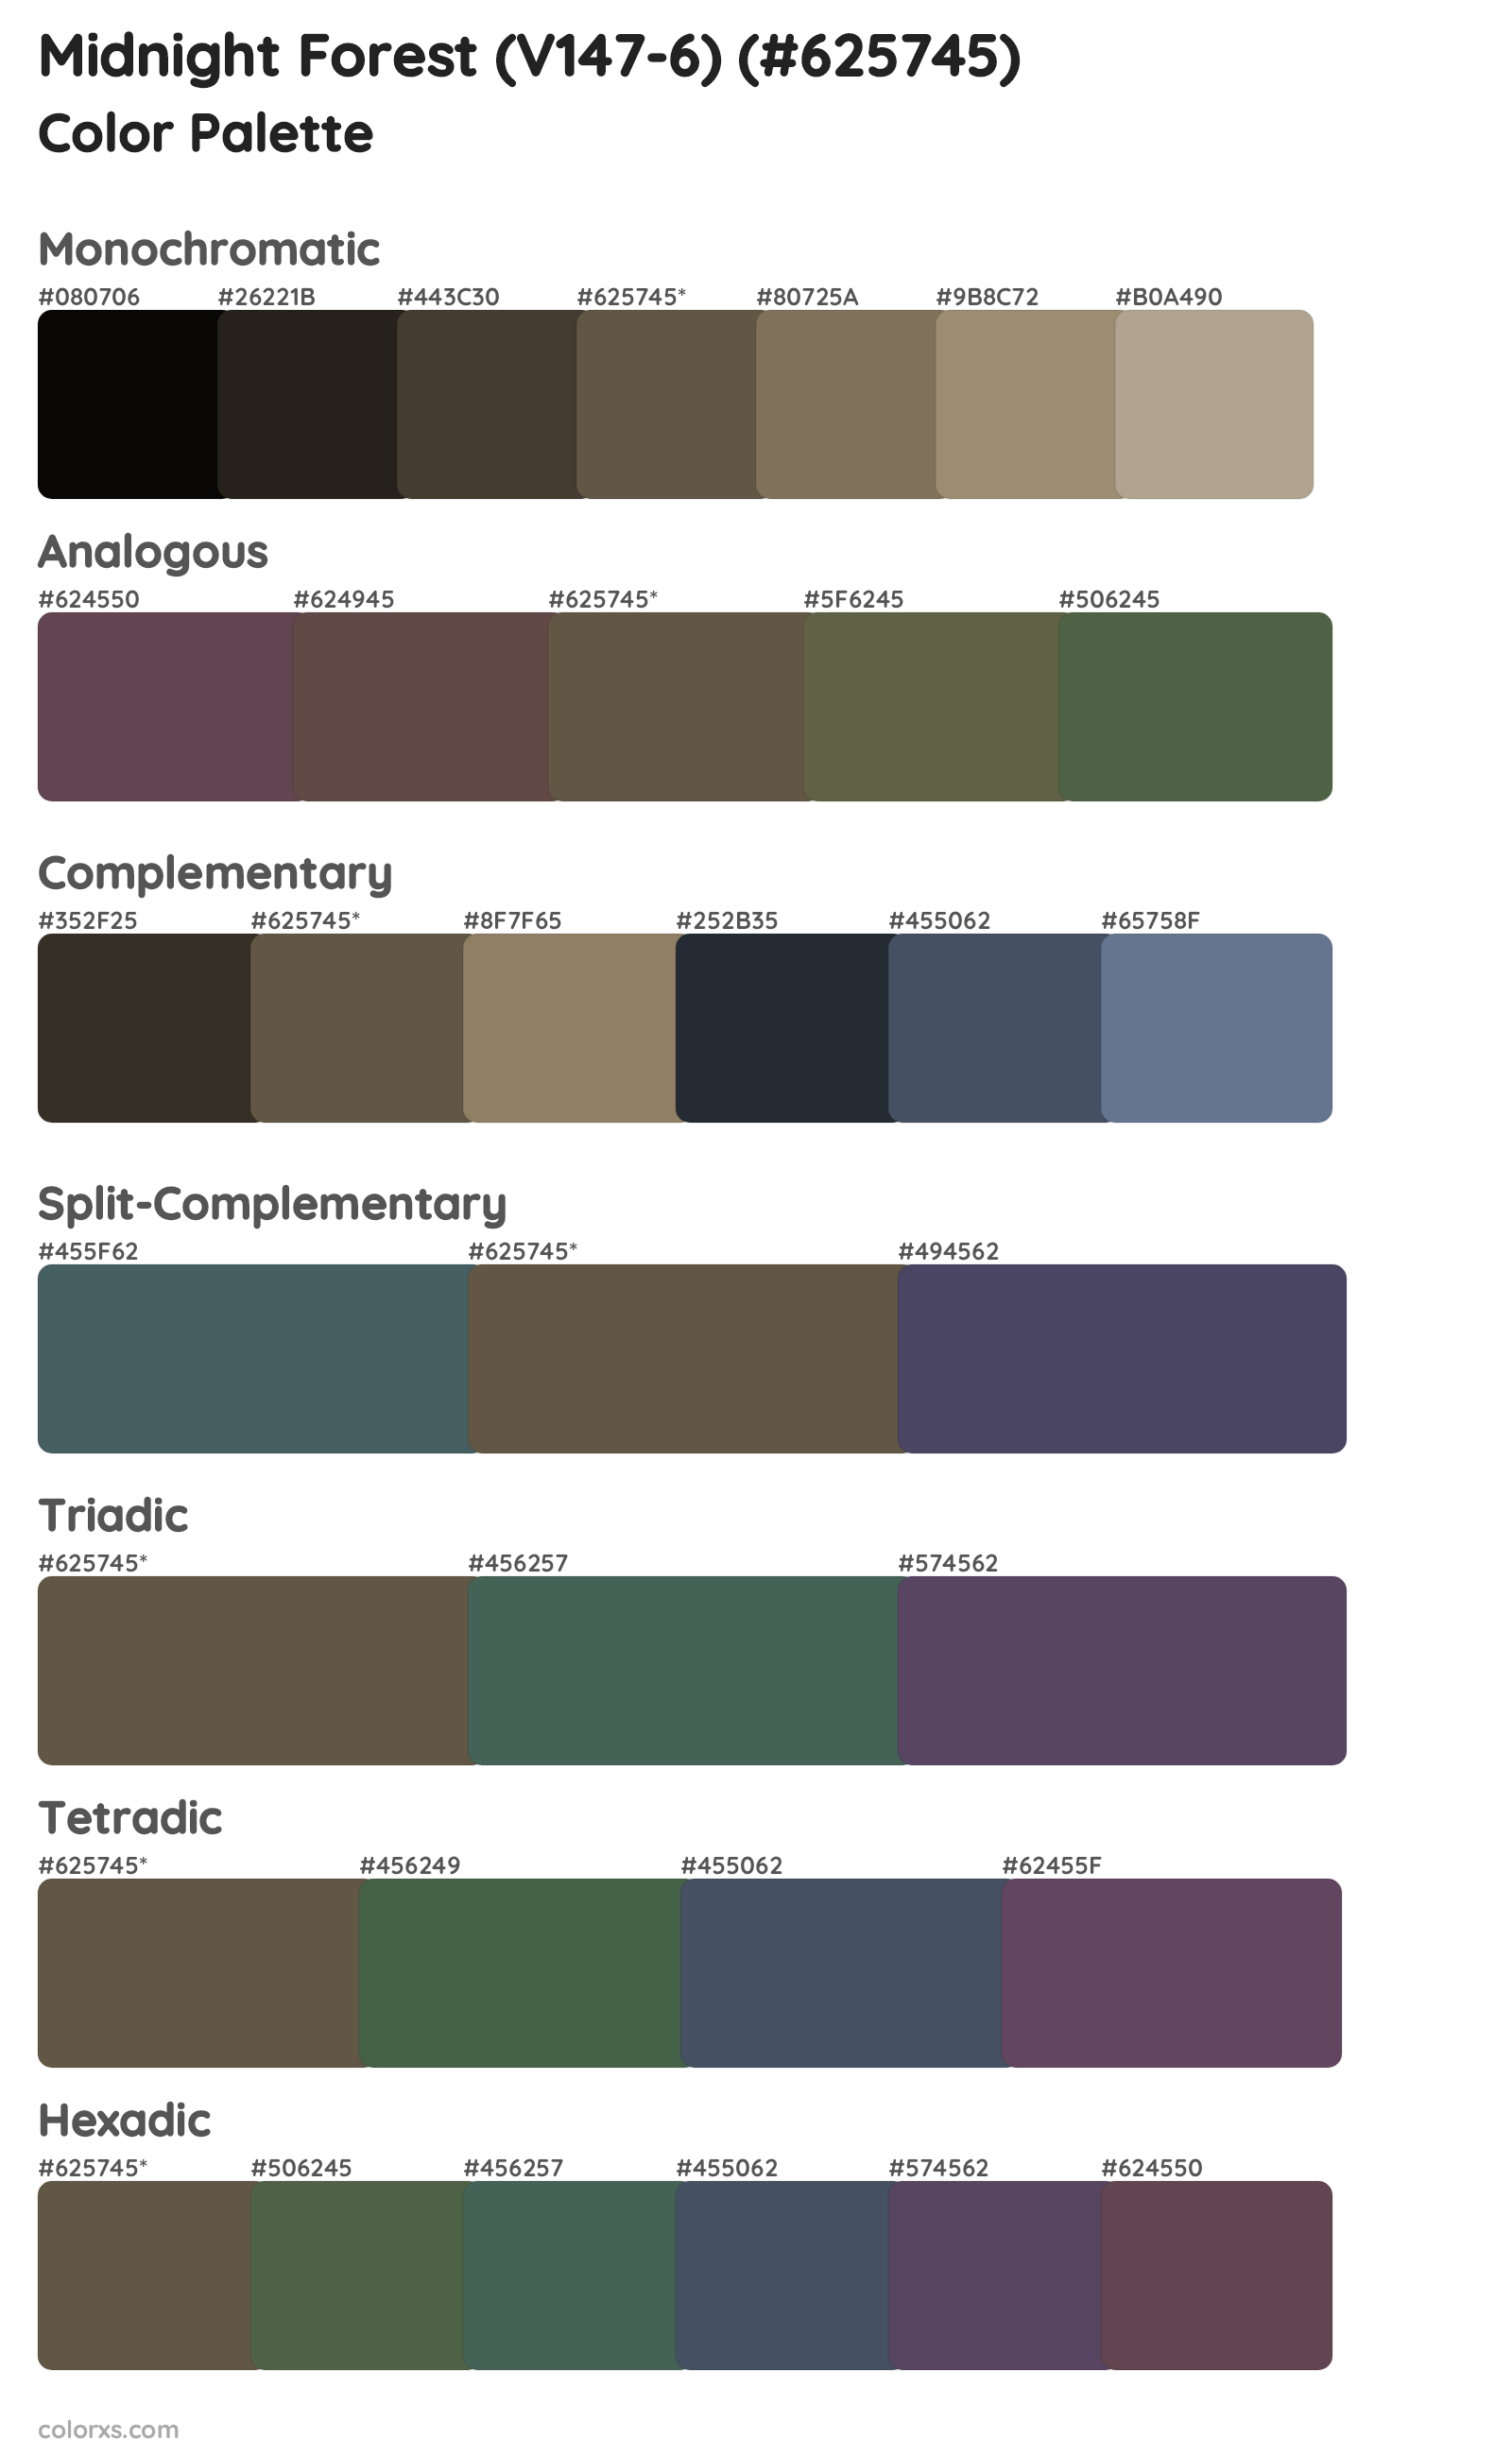 Midnight Forest (V147-6) Color Scheme Palettes